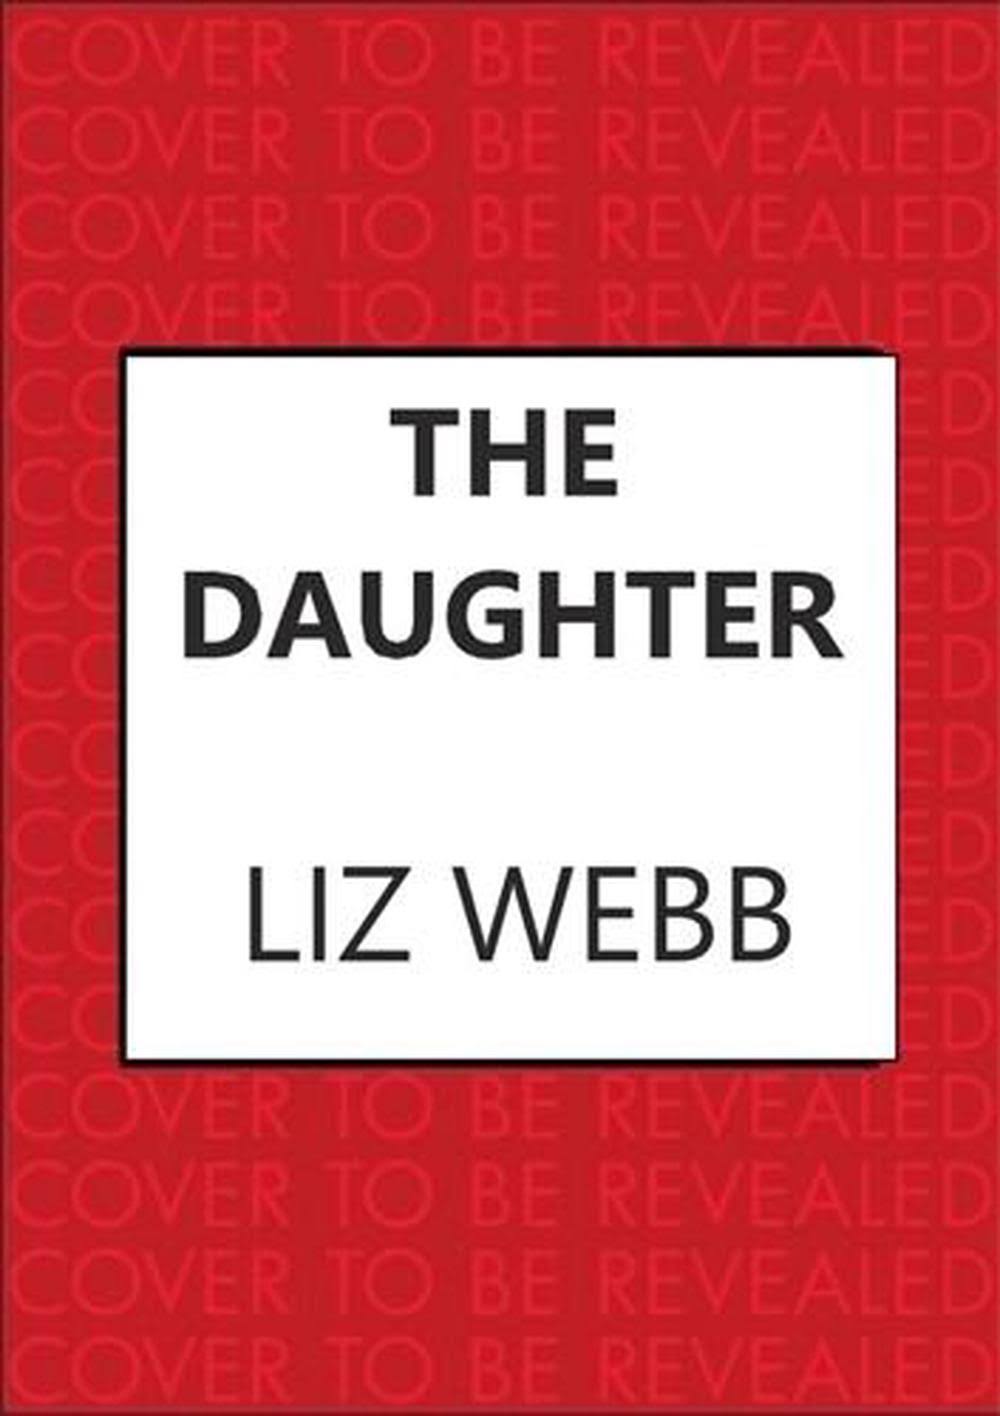 The Daughter by Liz Webb